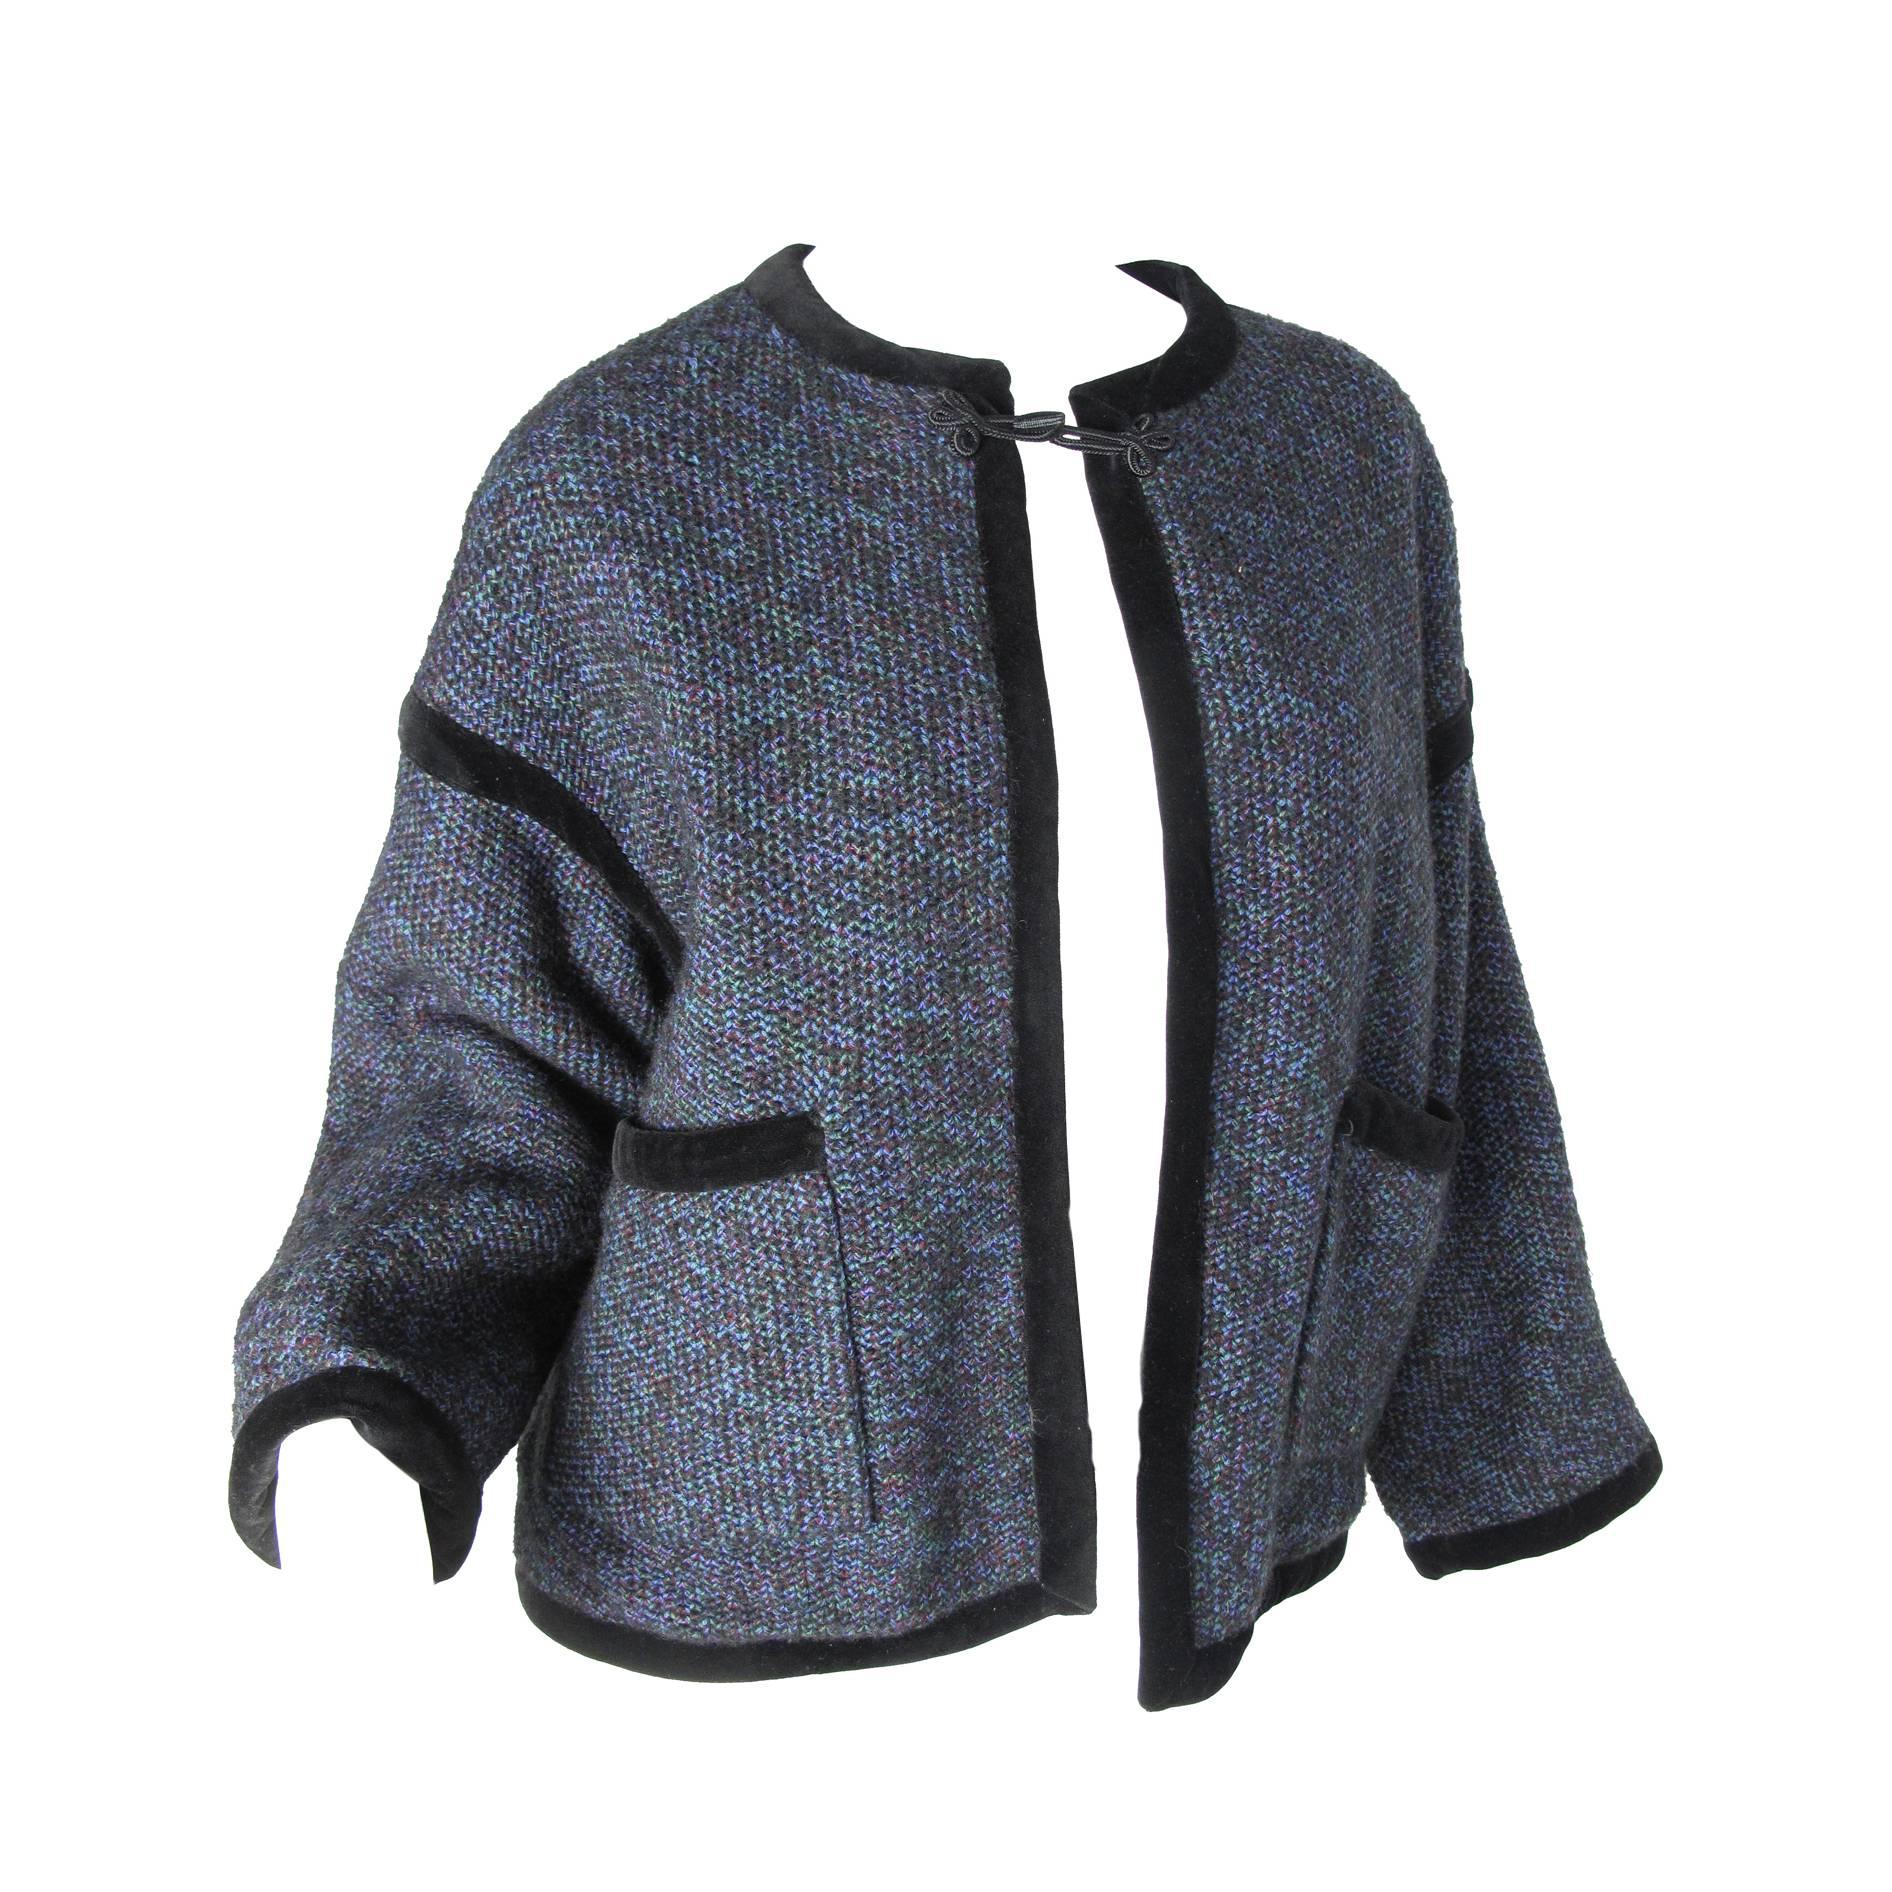 Ungaro Knit Jacket with Rabbit Fur Lining, 1980s